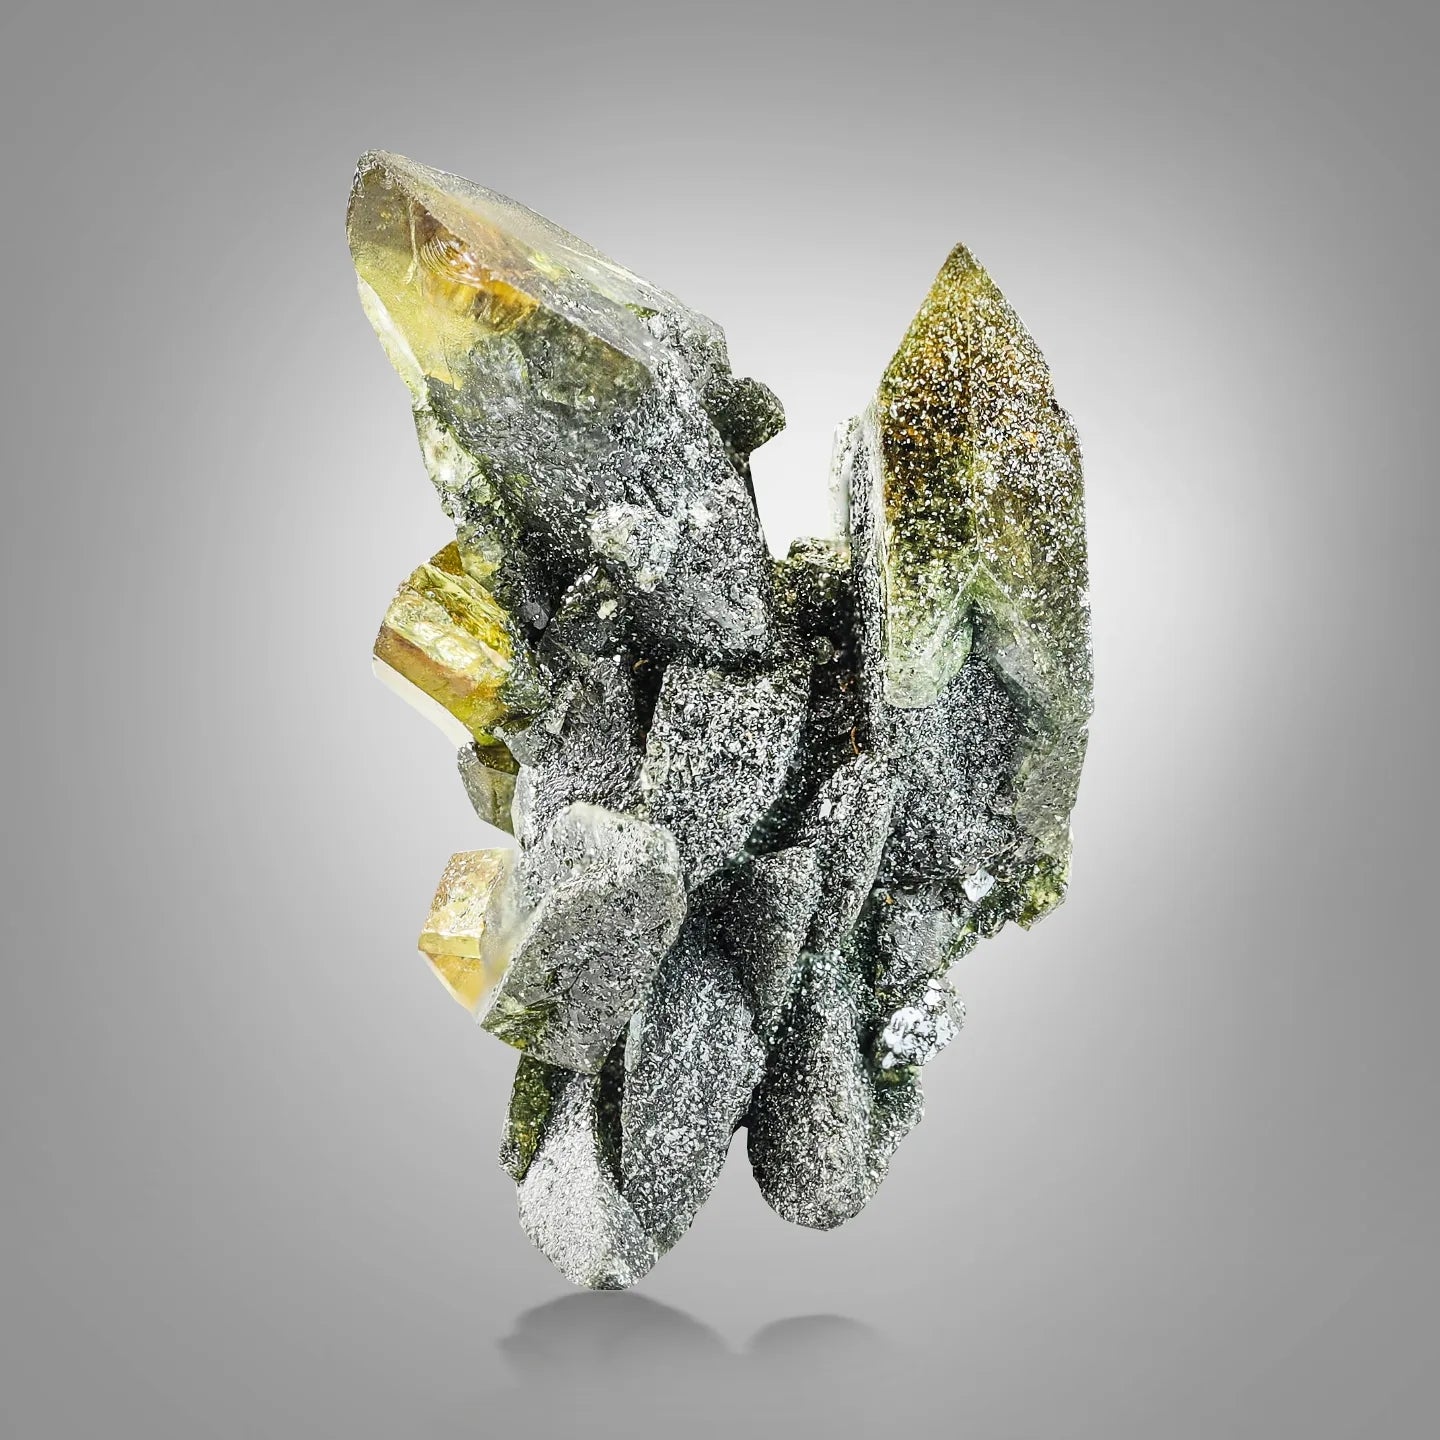 Exquisite aggregate of gem green Titanite crystals from Skardu, Pakistan